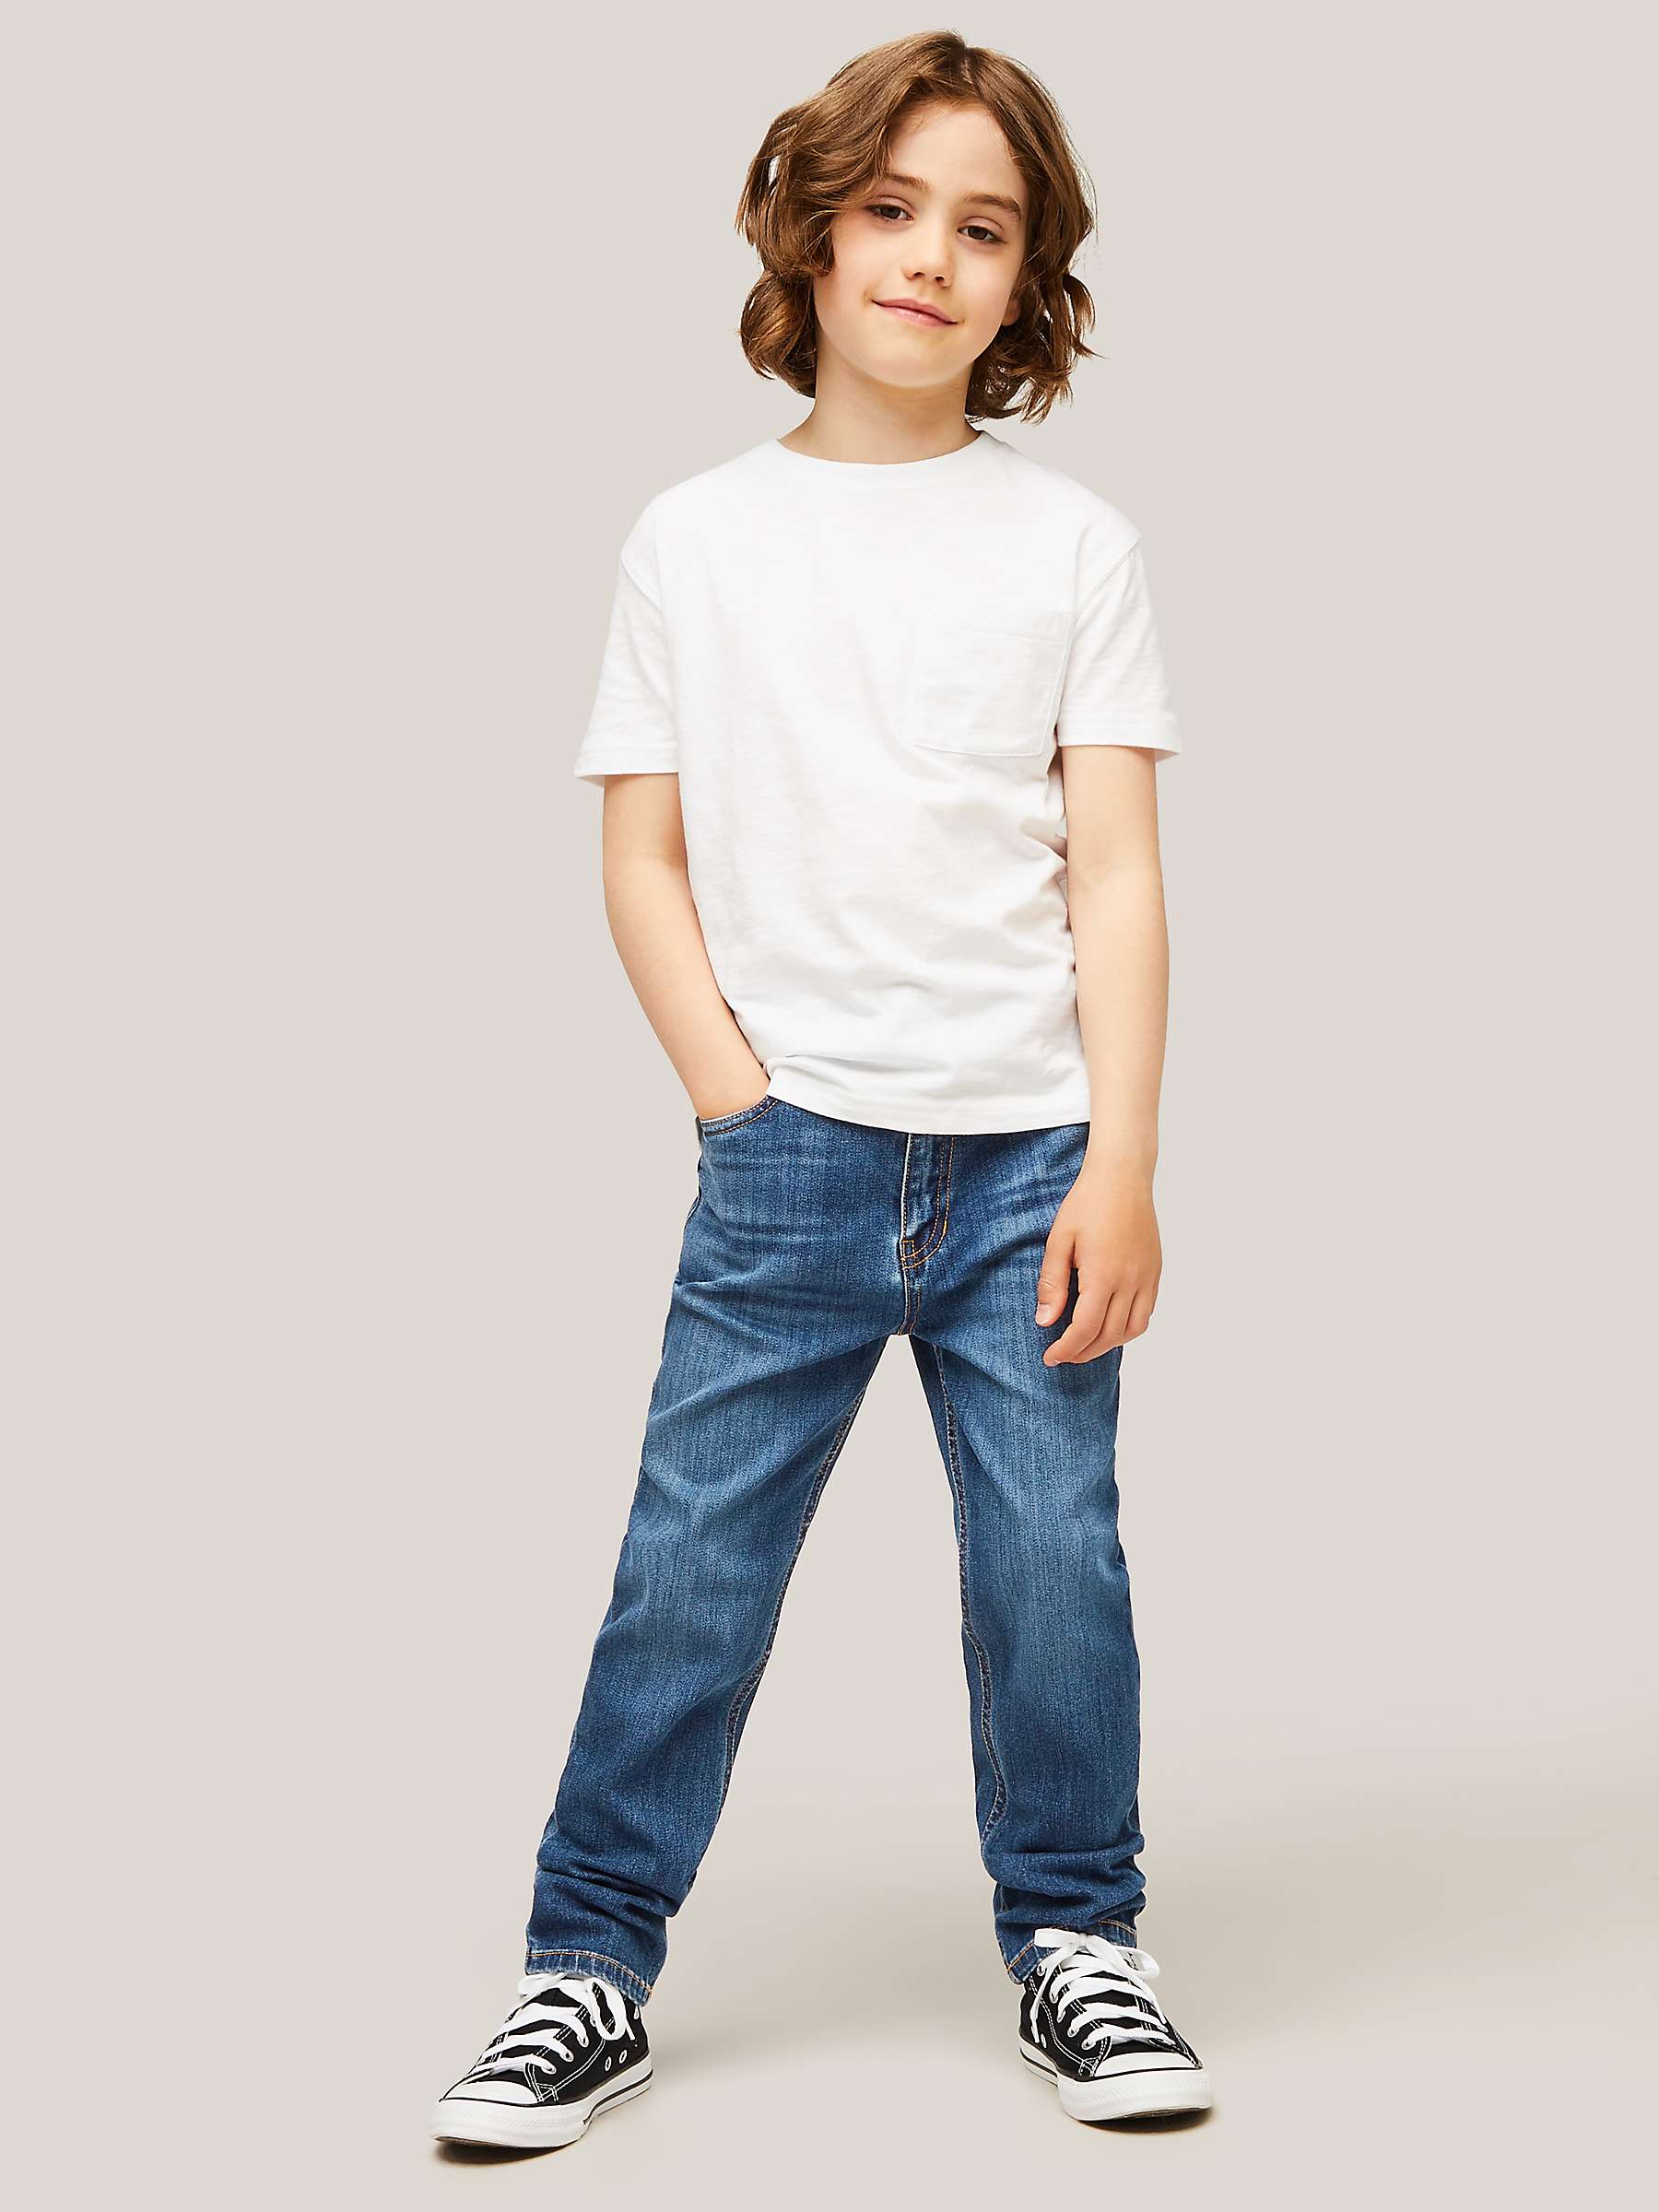 John Lewis John Lewis Boys Blue   Straight Jeans Size 4 Years 